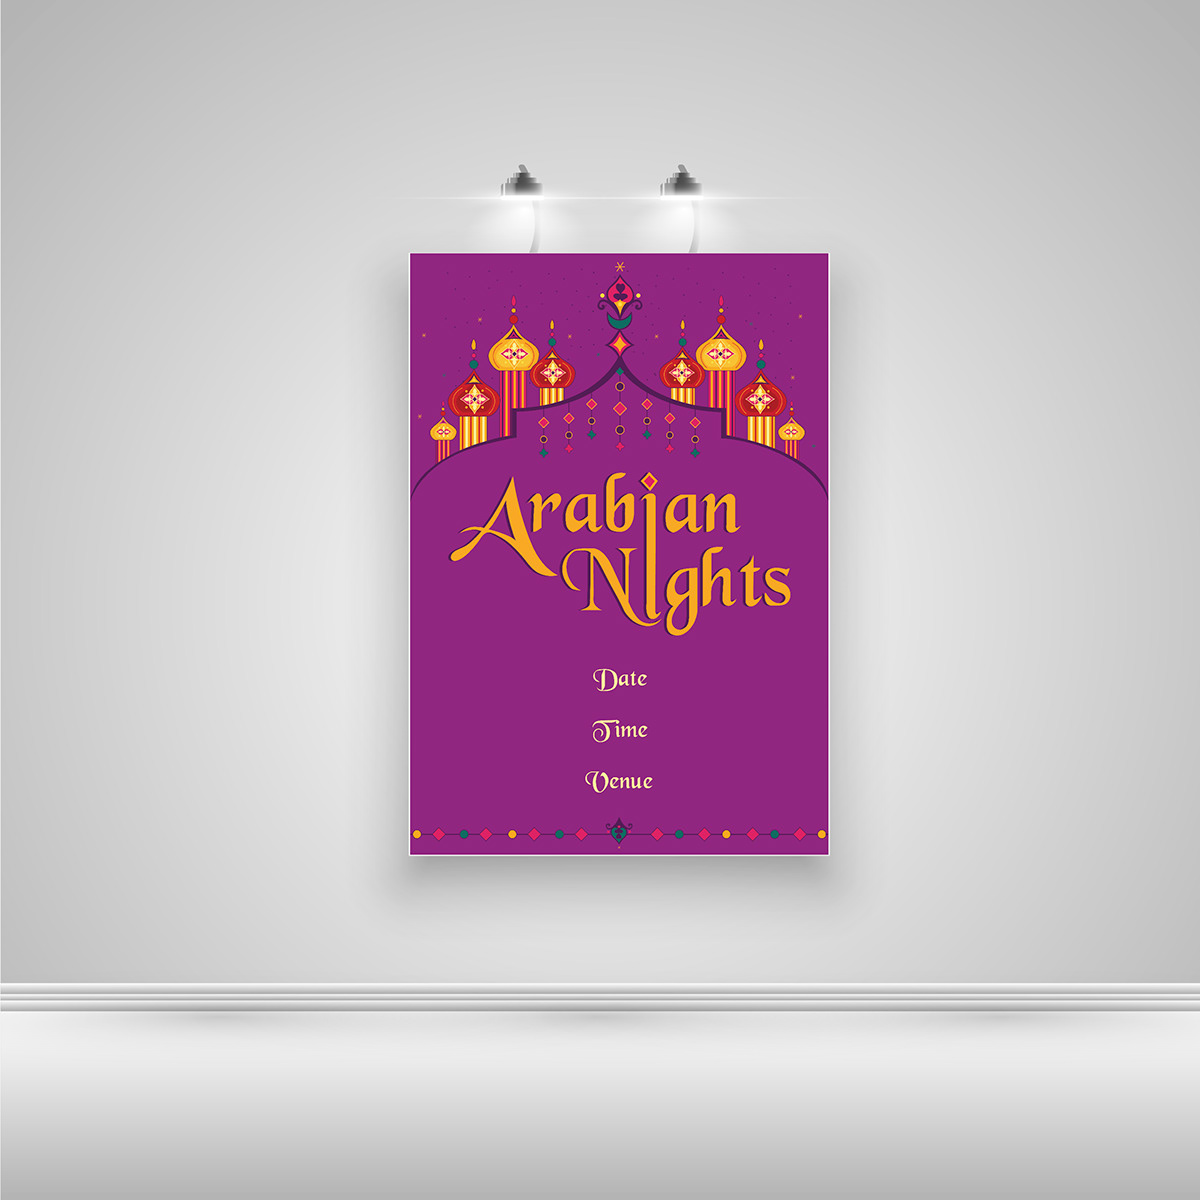 1001 nights arabian arabian nights arabian nights themed Behance design design direction Design Inspiration Event Design graphic design 